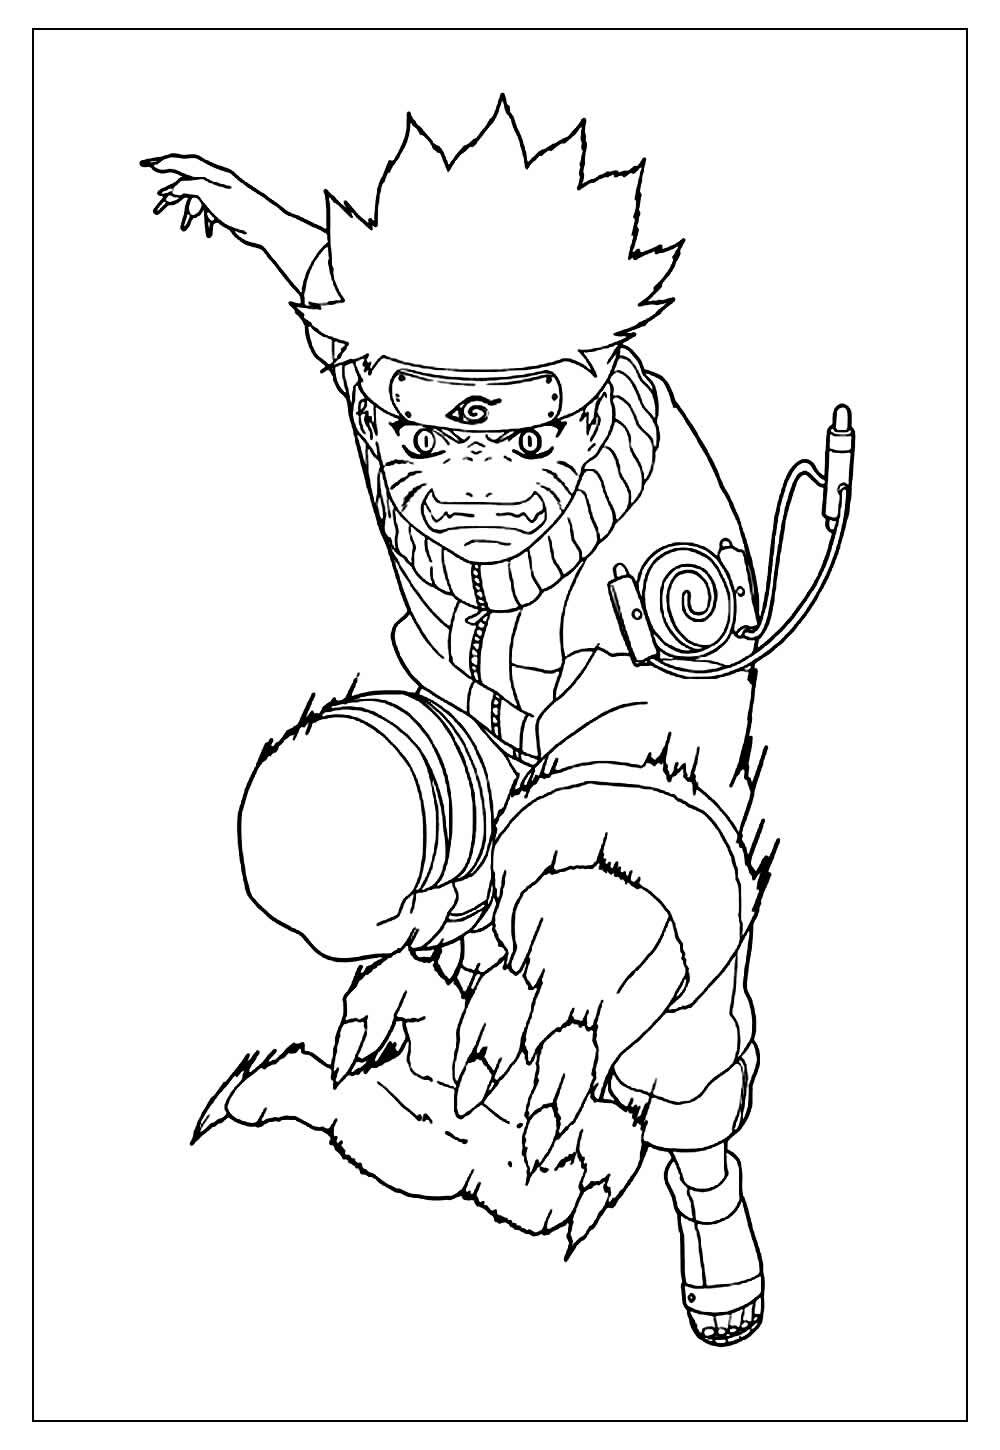 Meu desenho do Naruto e Boruto